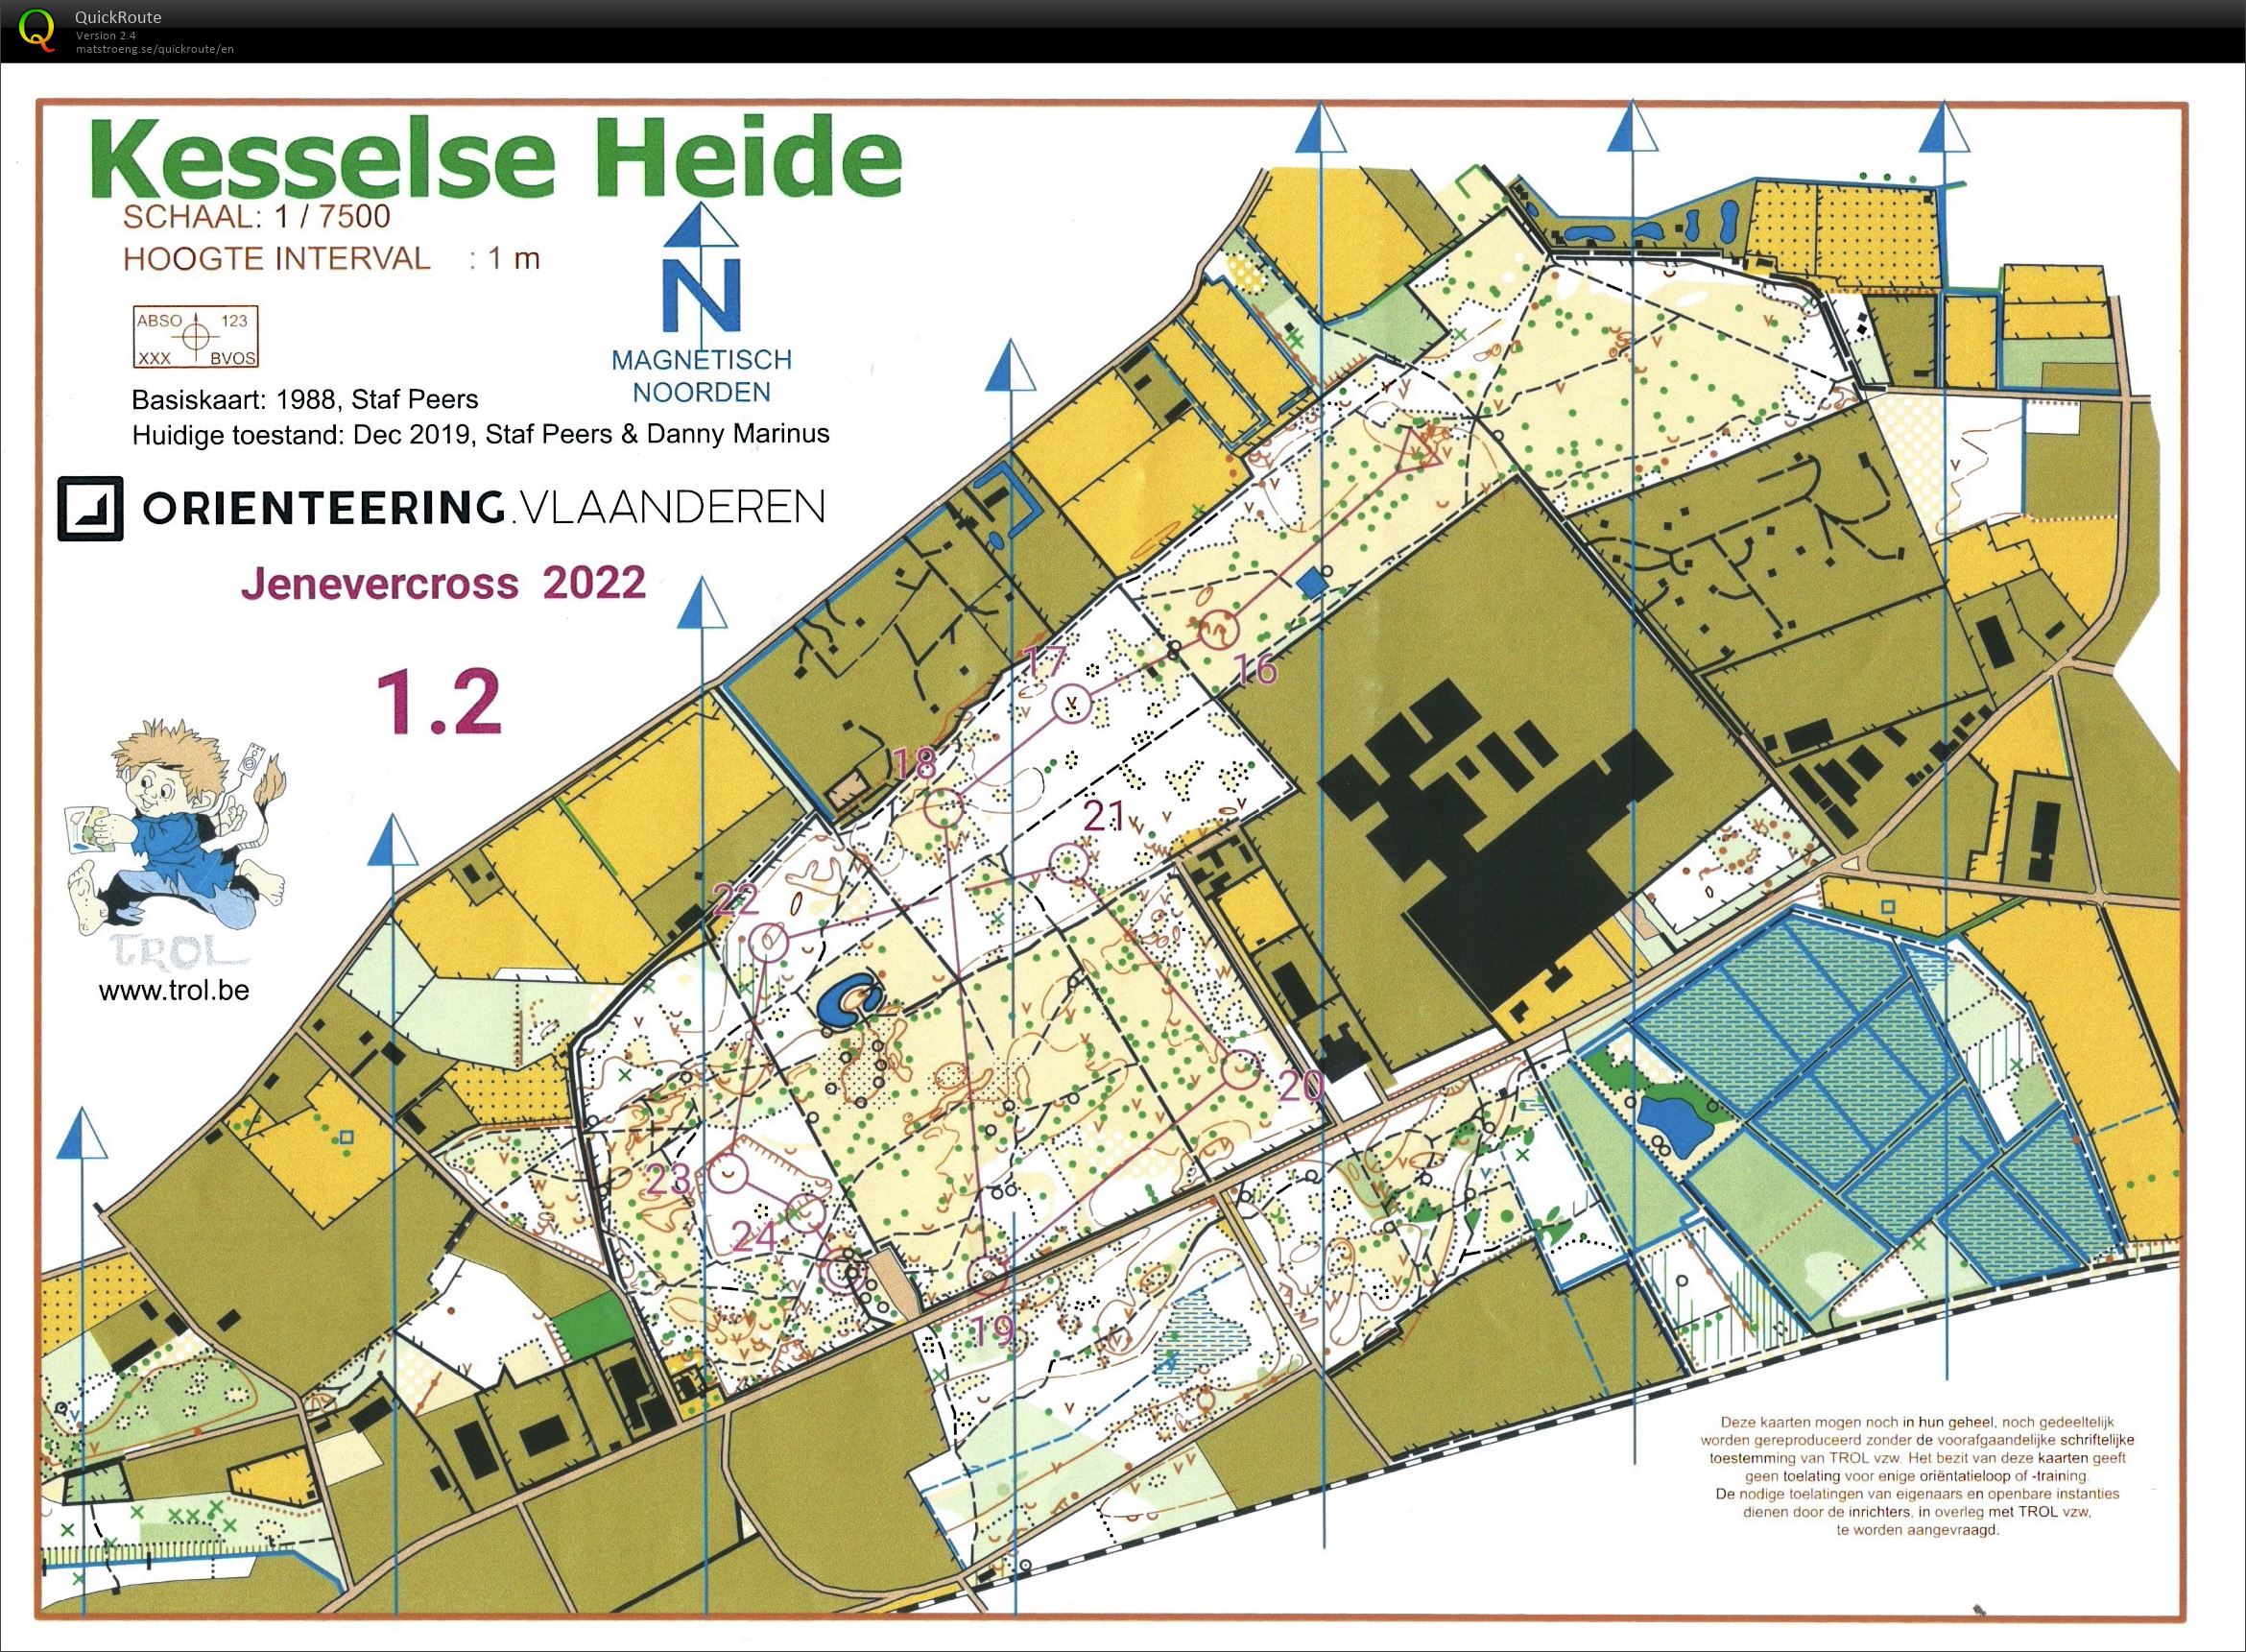 Jenevercross 2022 - Kesselse Heide - 1.2 (07.01.2022)